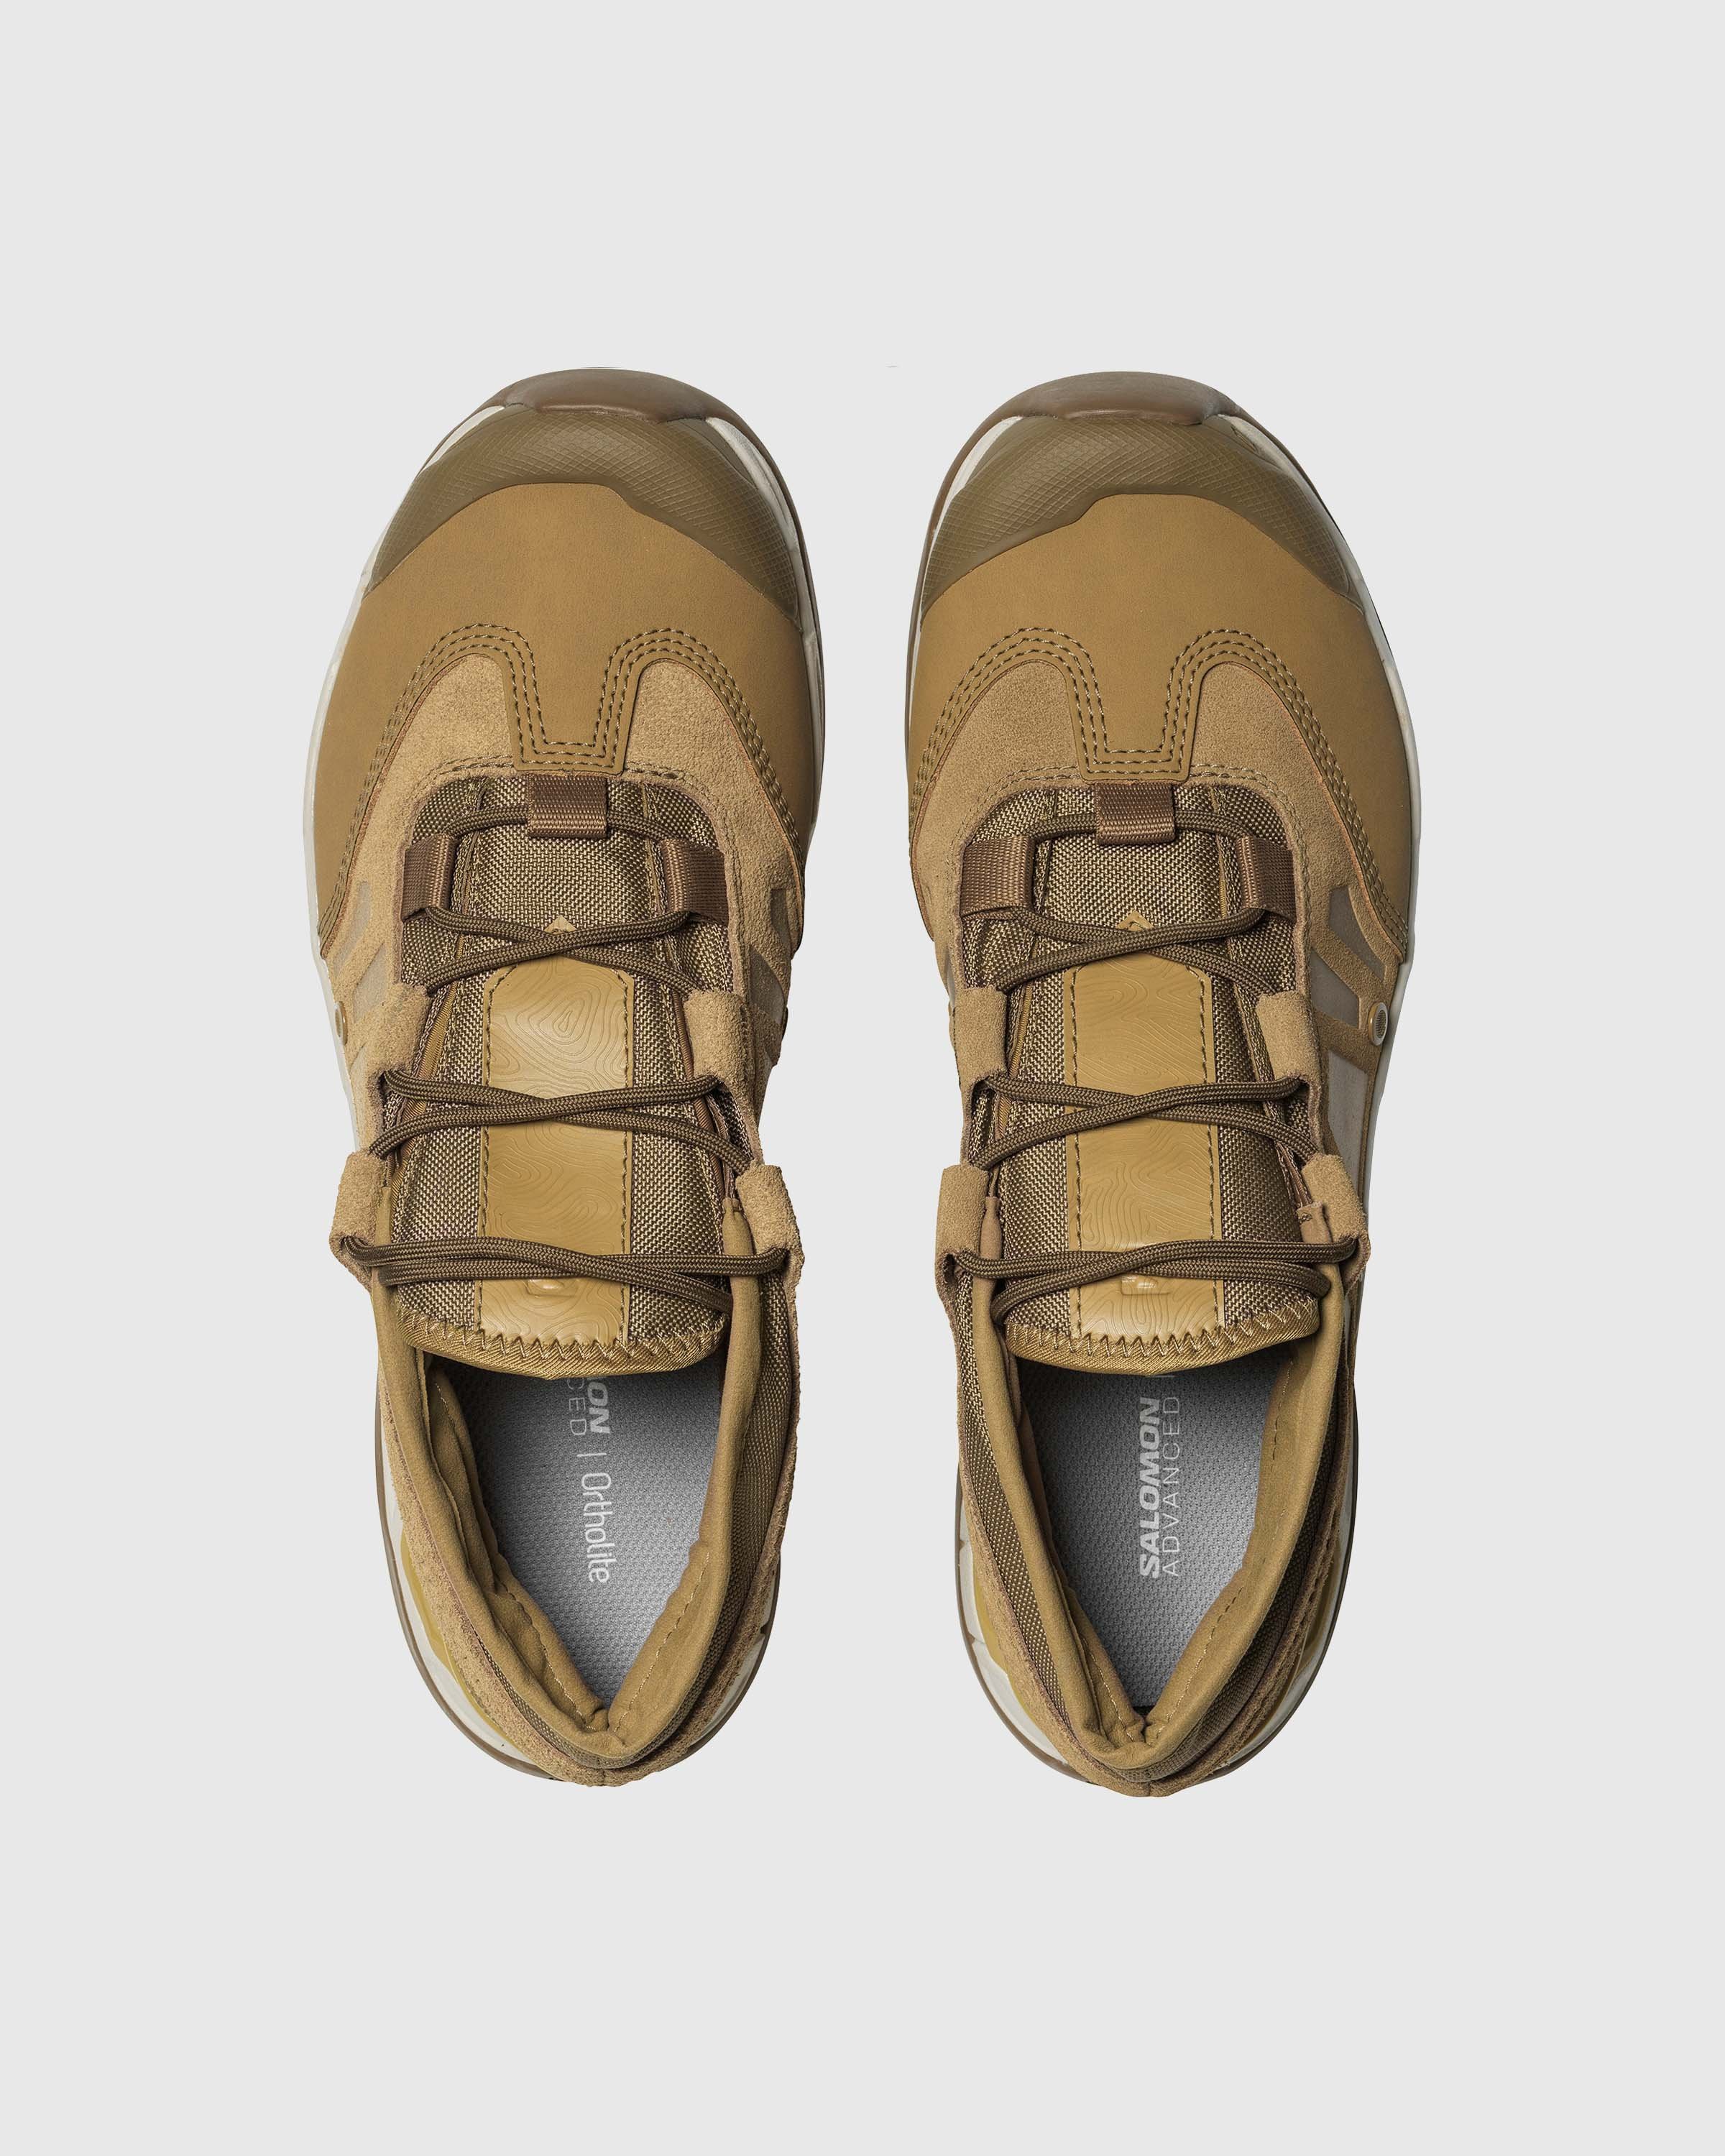 Salomon - Jungle Ultra Low Advanced Dull Go - Footwear - Brown - Image 4